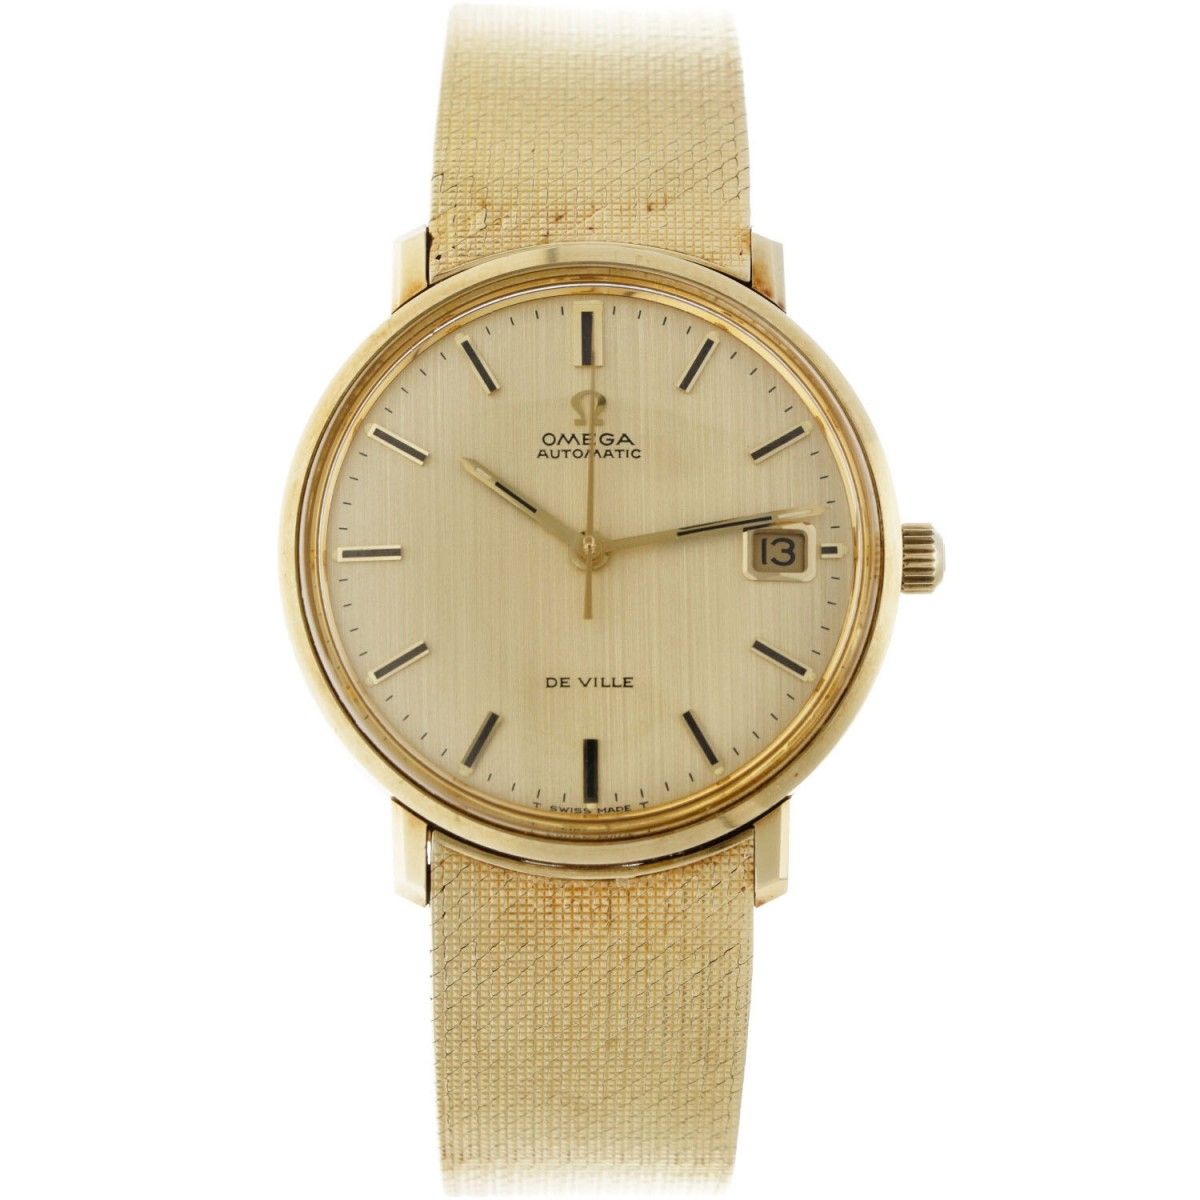 Omega de Ville 166.033 - Men's watch - apprx. 1974. Case: yellow gold (14 kt.) -&hellip;